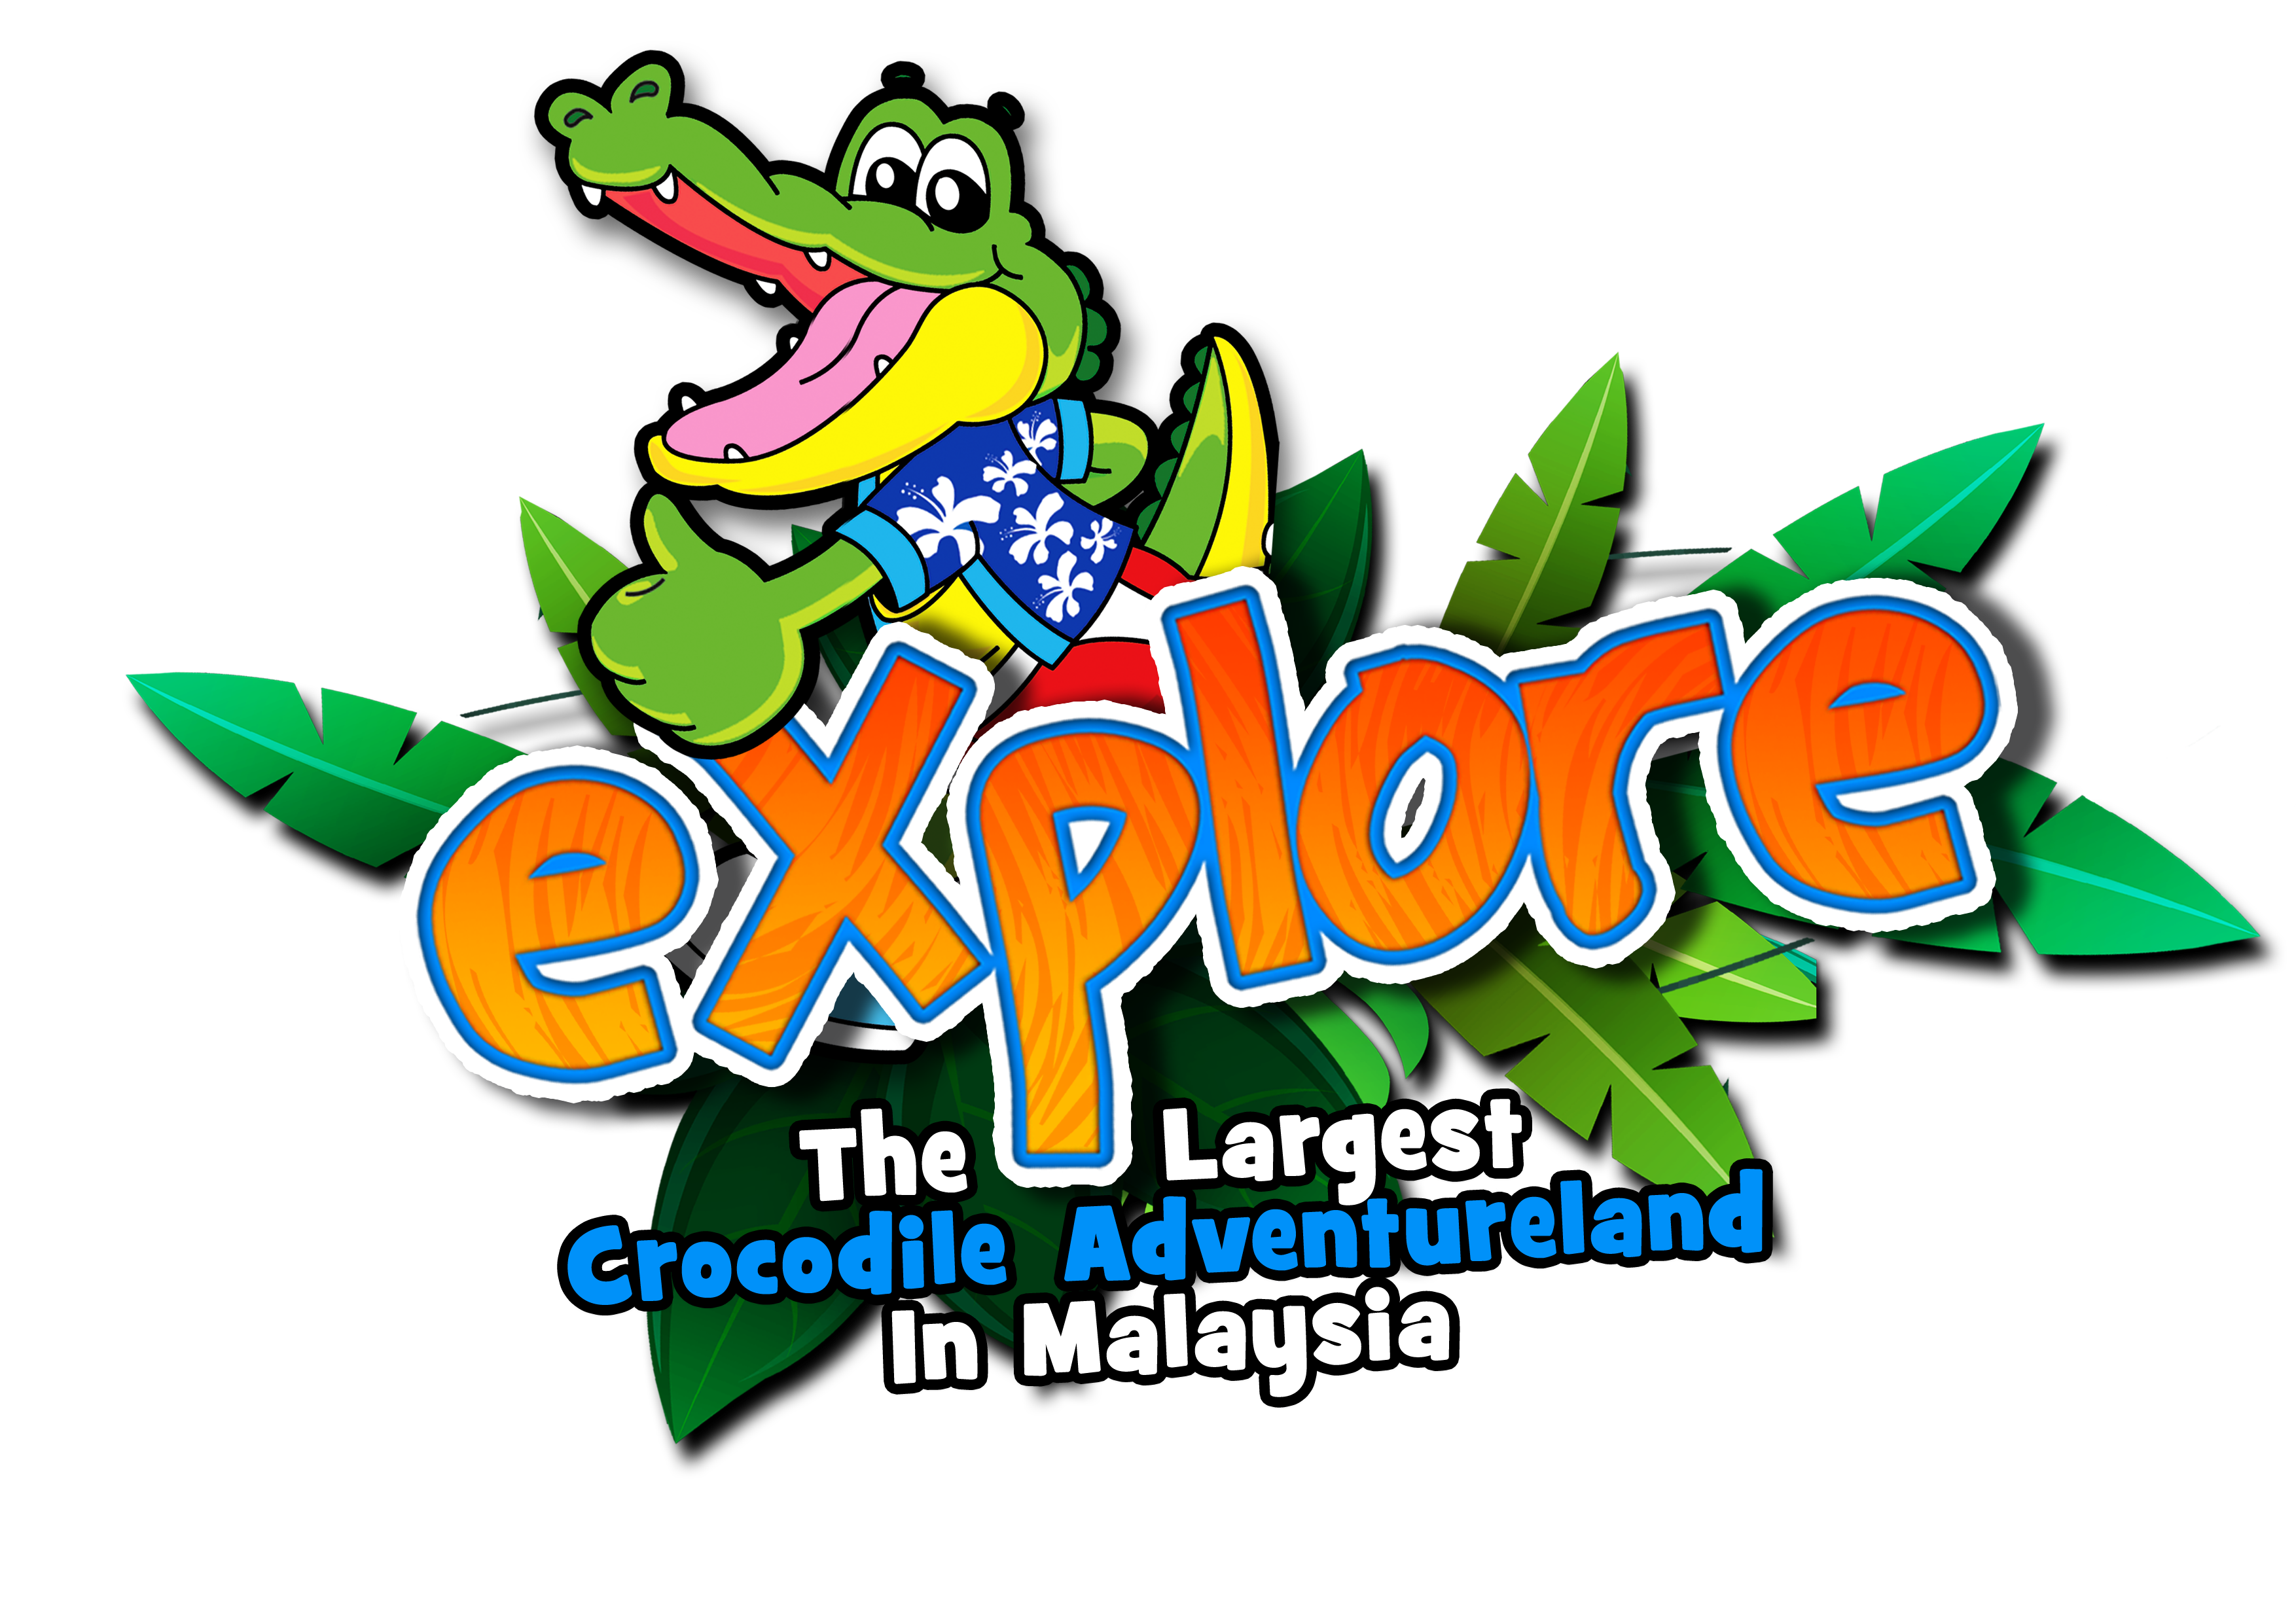 Concert clipart admission ticket. Crocodile adventureland langkawi only